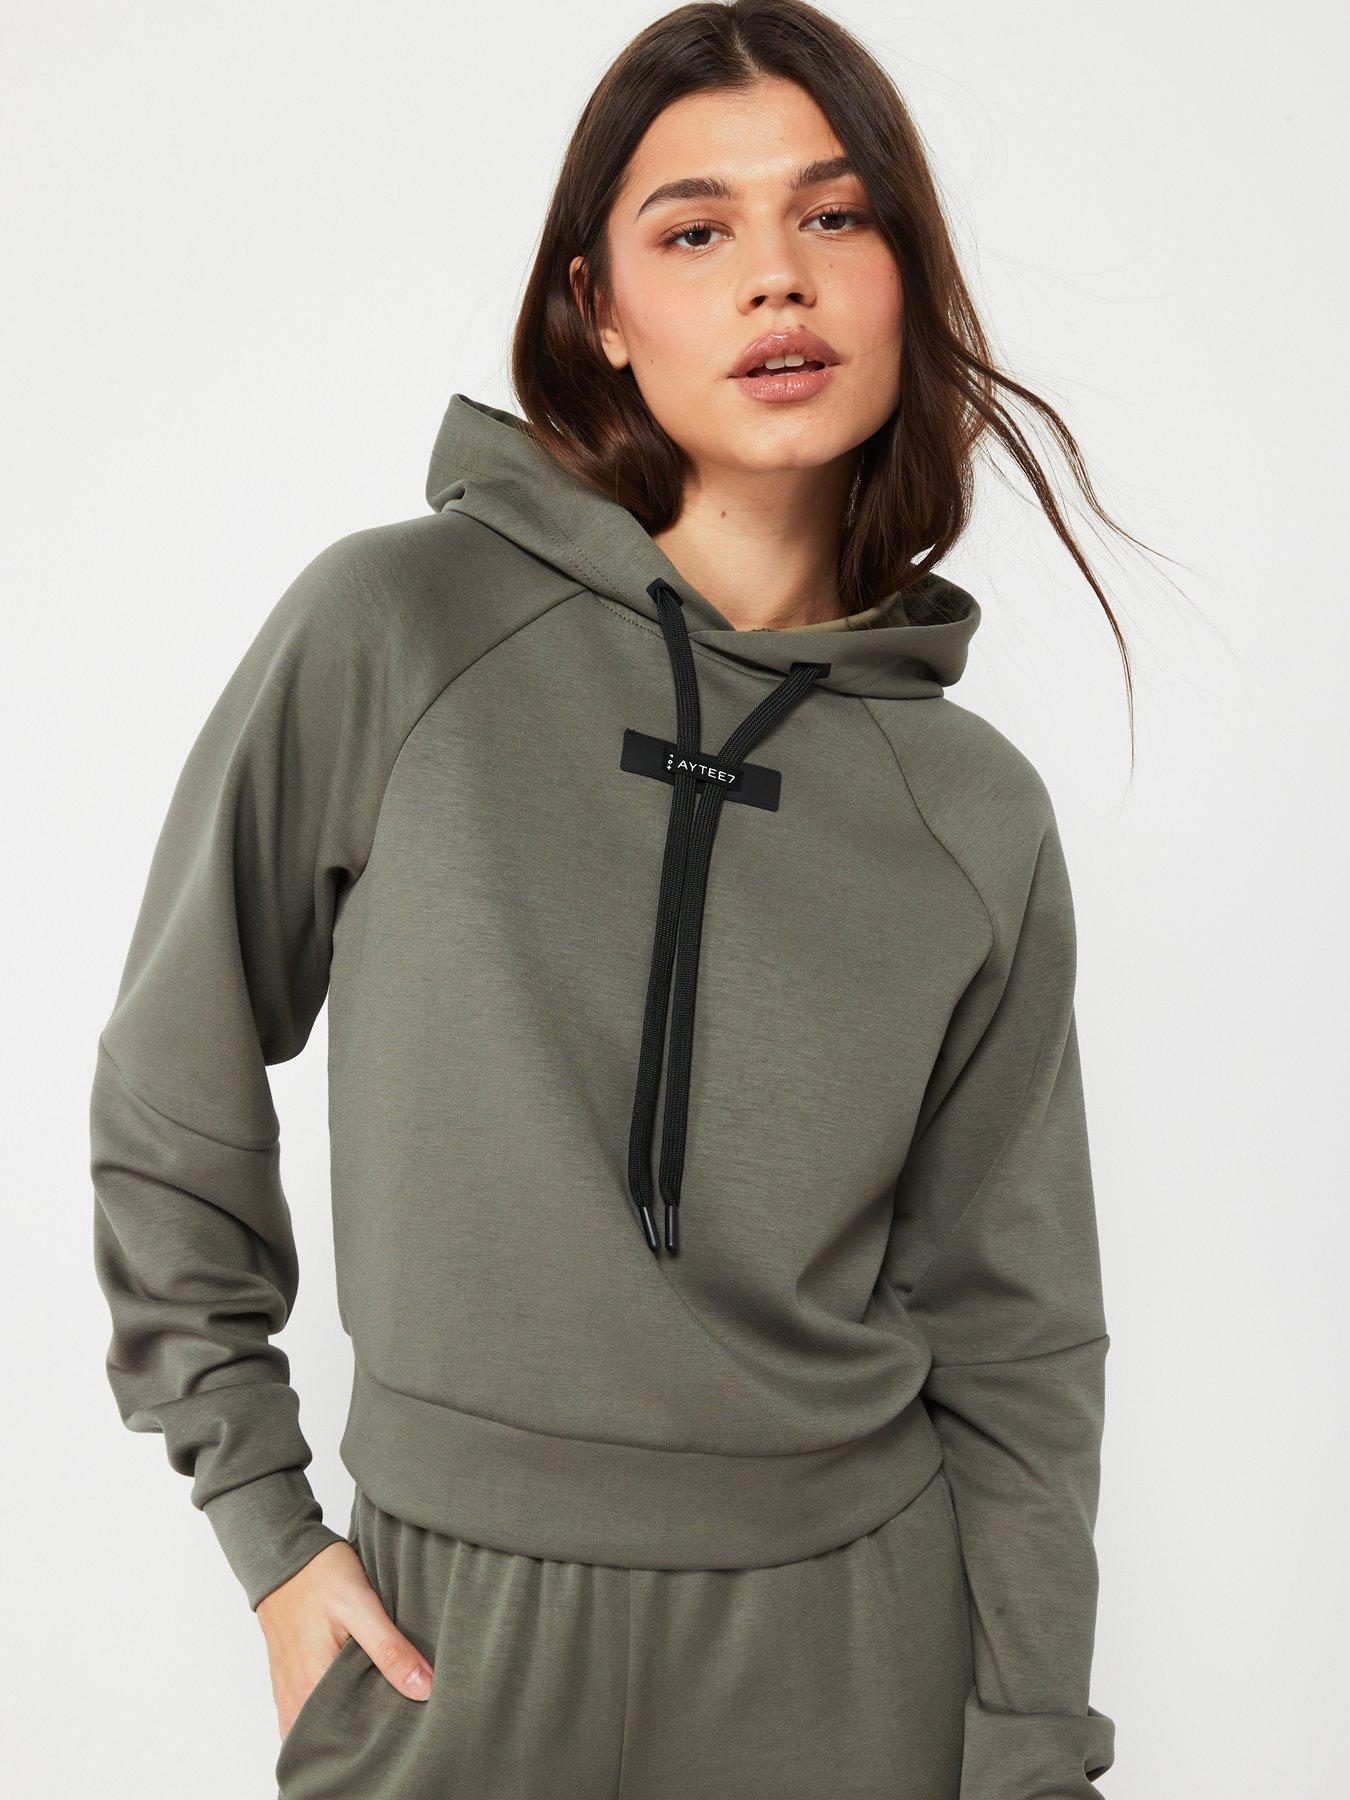 New Sweatshirts & Hoodies for Women